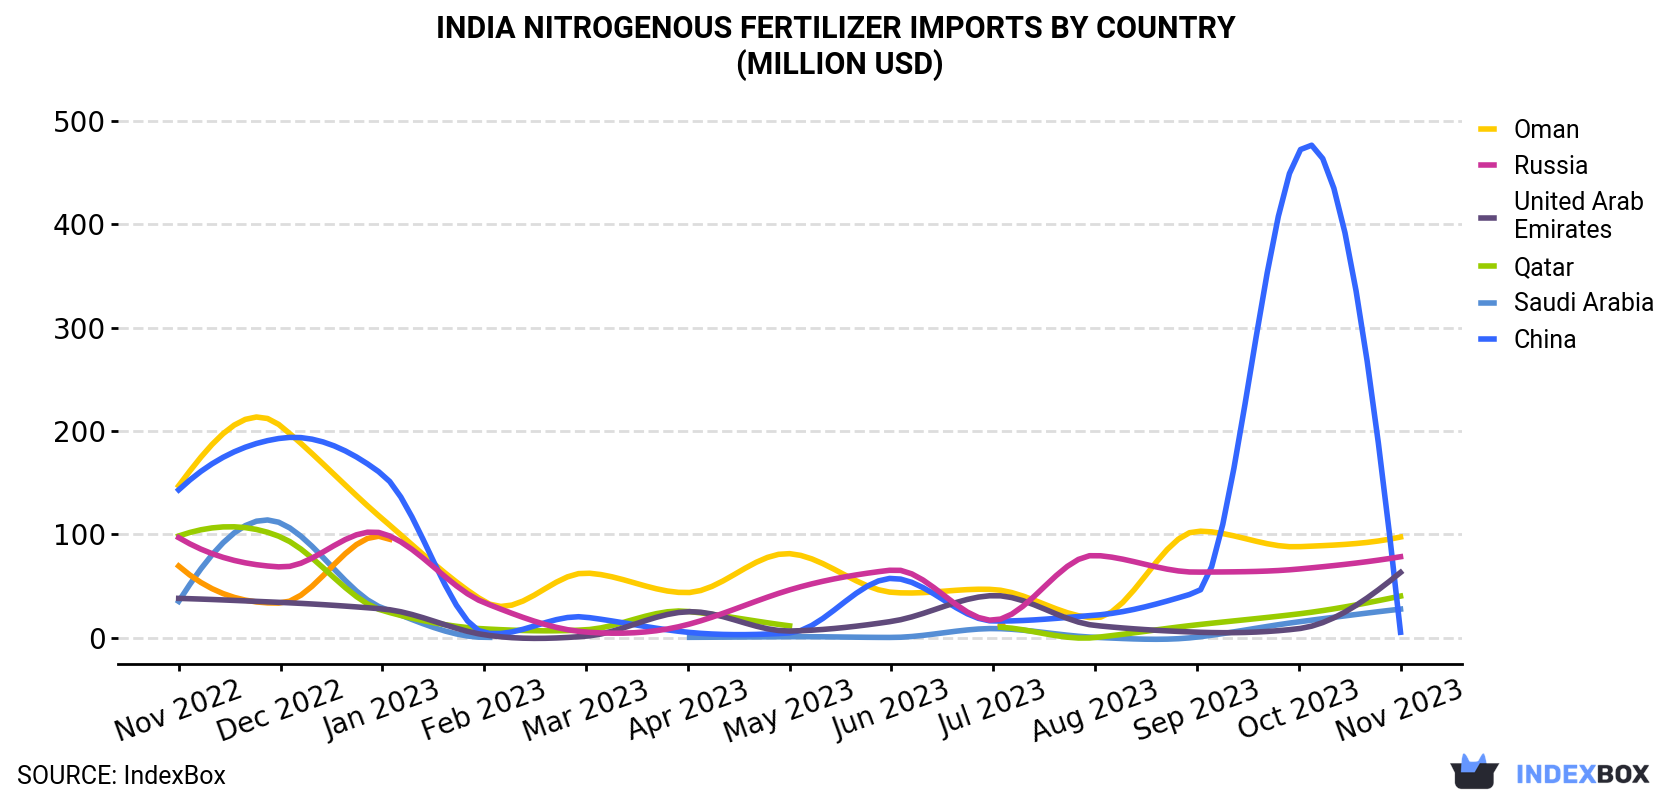 India Nitrogenous Fertilizer Imports By Country (Million USD)